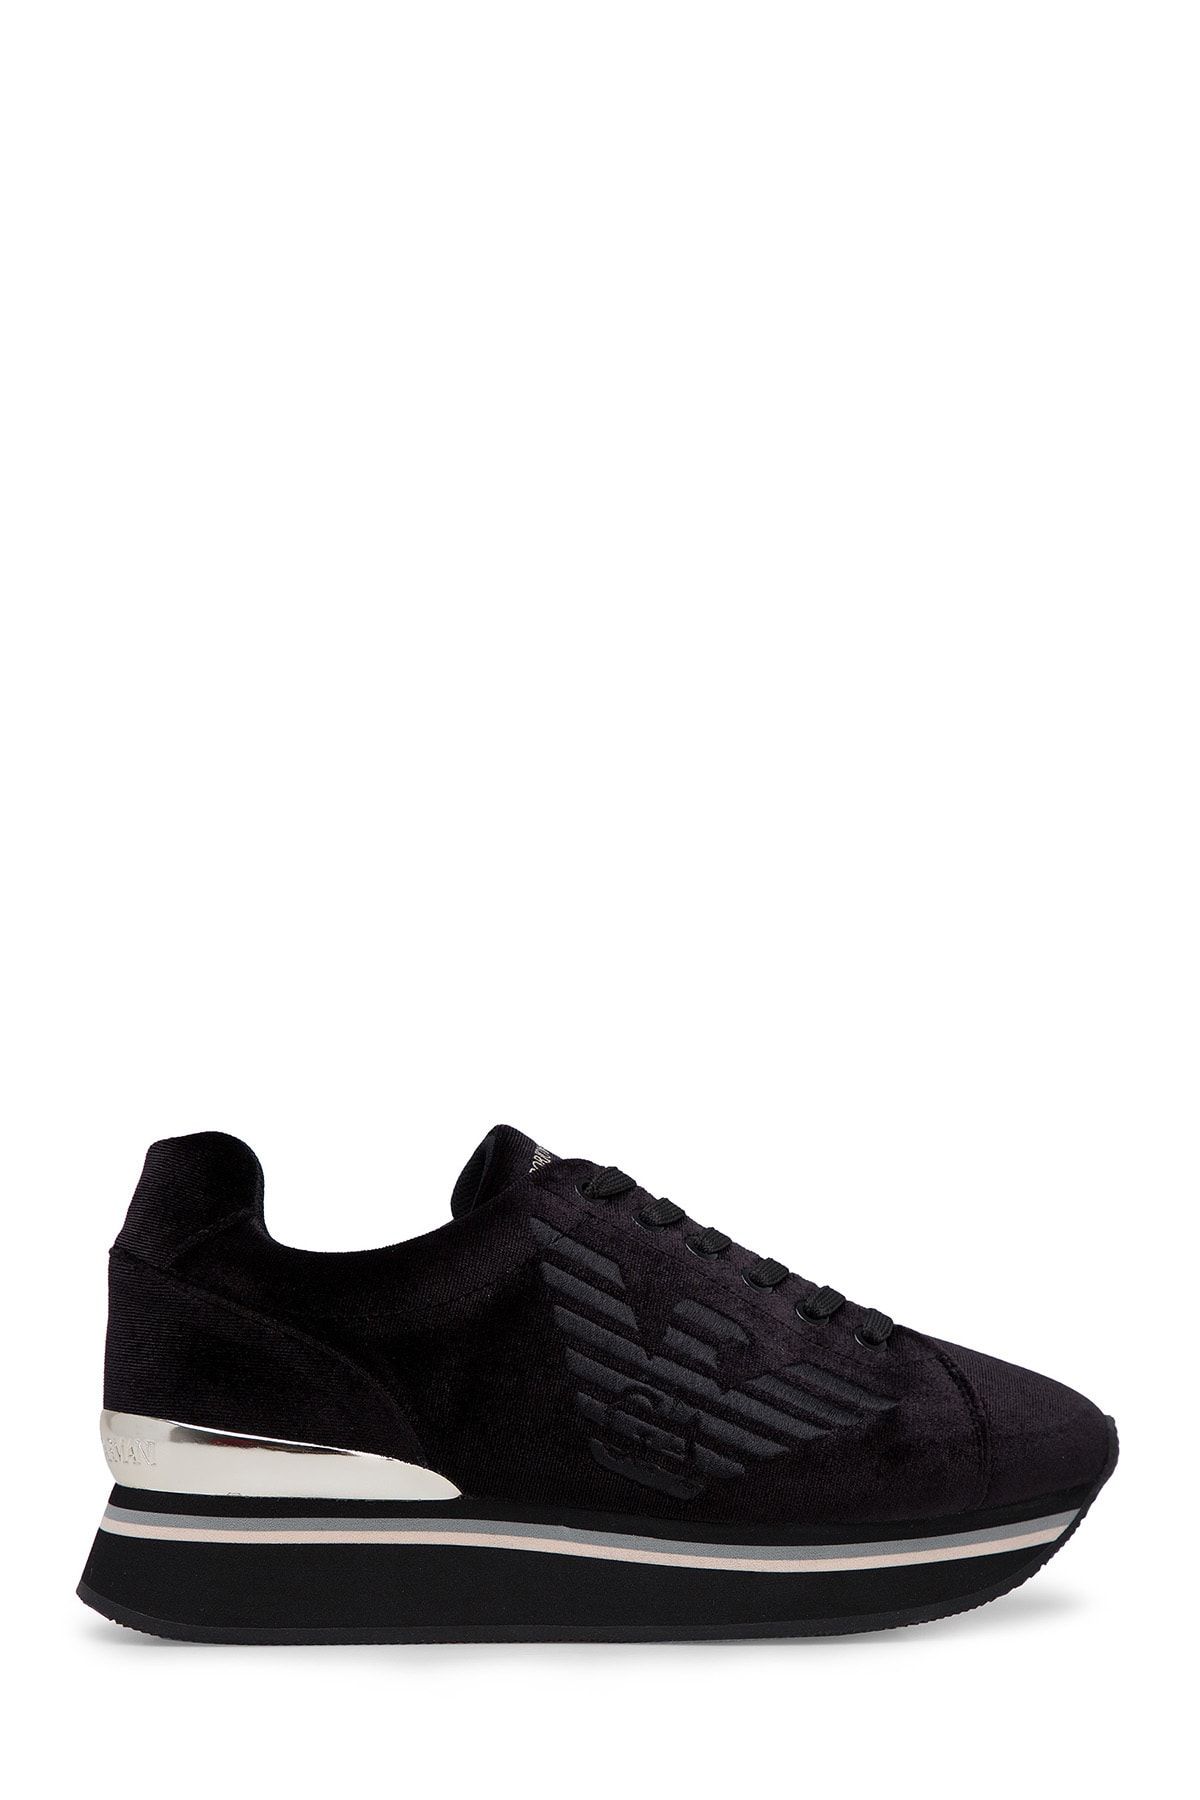 Emporio Armani Kadın Siyah Sneaker X3X057 XM064 K001